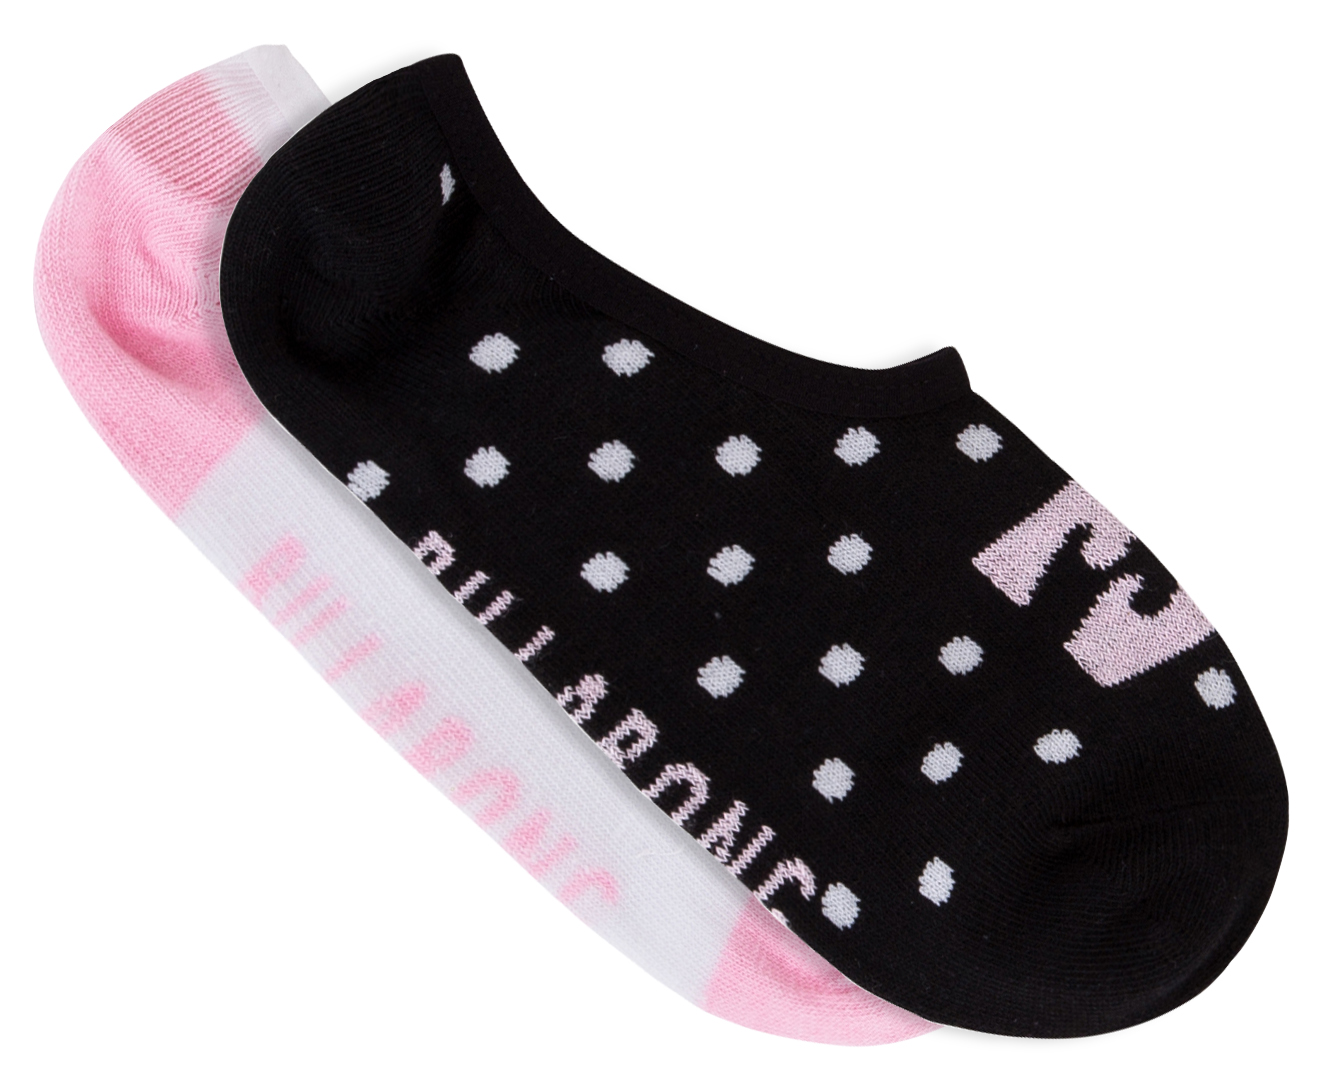 Billabong Women's One Size Spotty Socks 5-Pack - Retro Pink | Catch.com.au